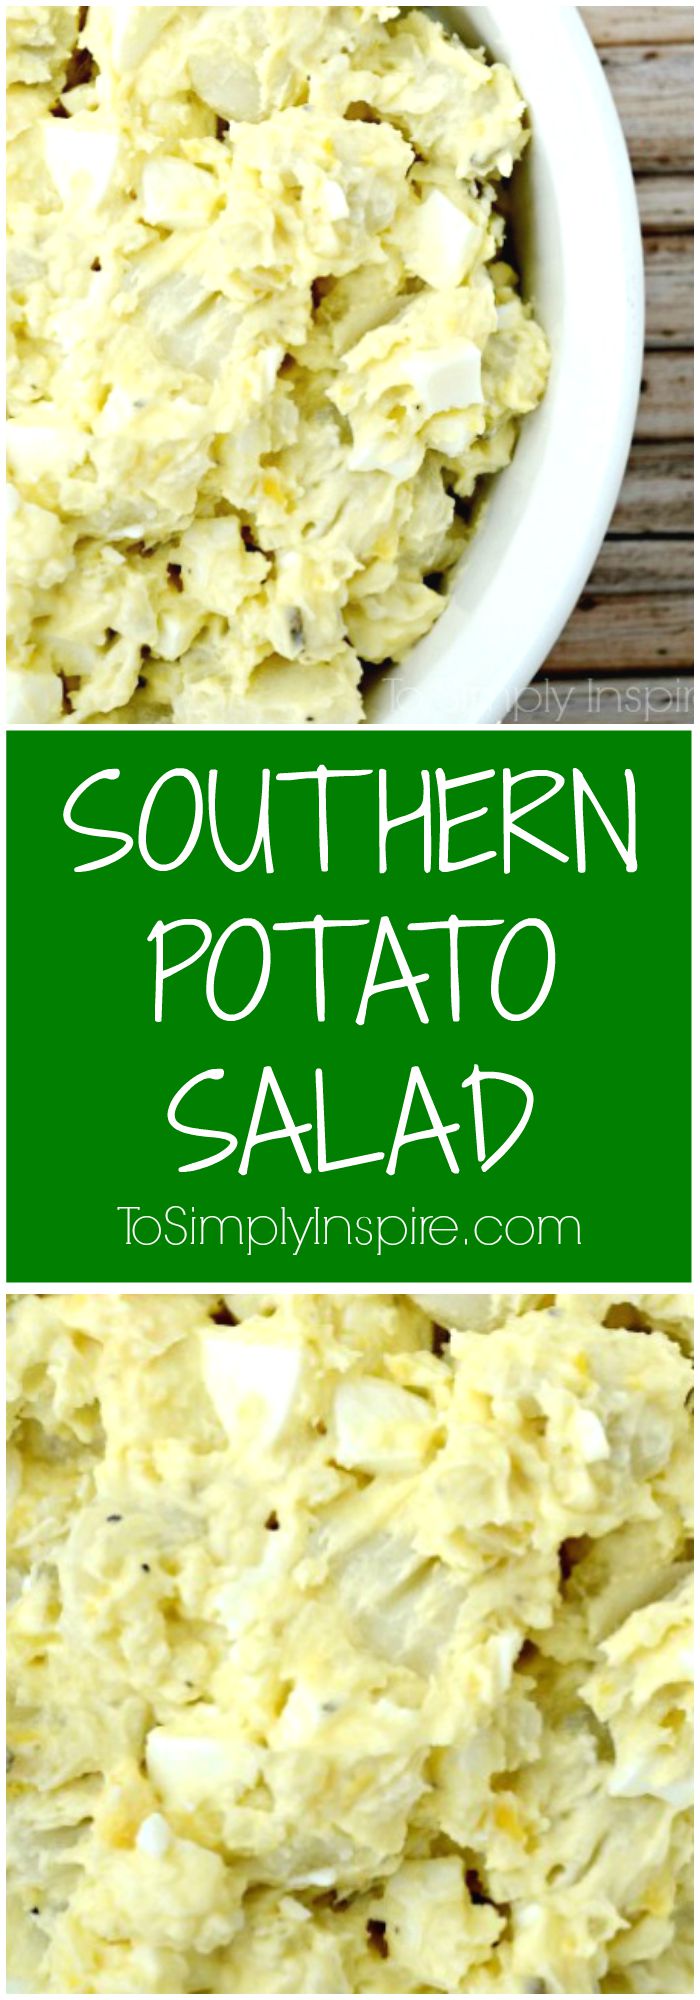 Favorite Southern Potato Salad Recipe - A Classic, Creamy Version